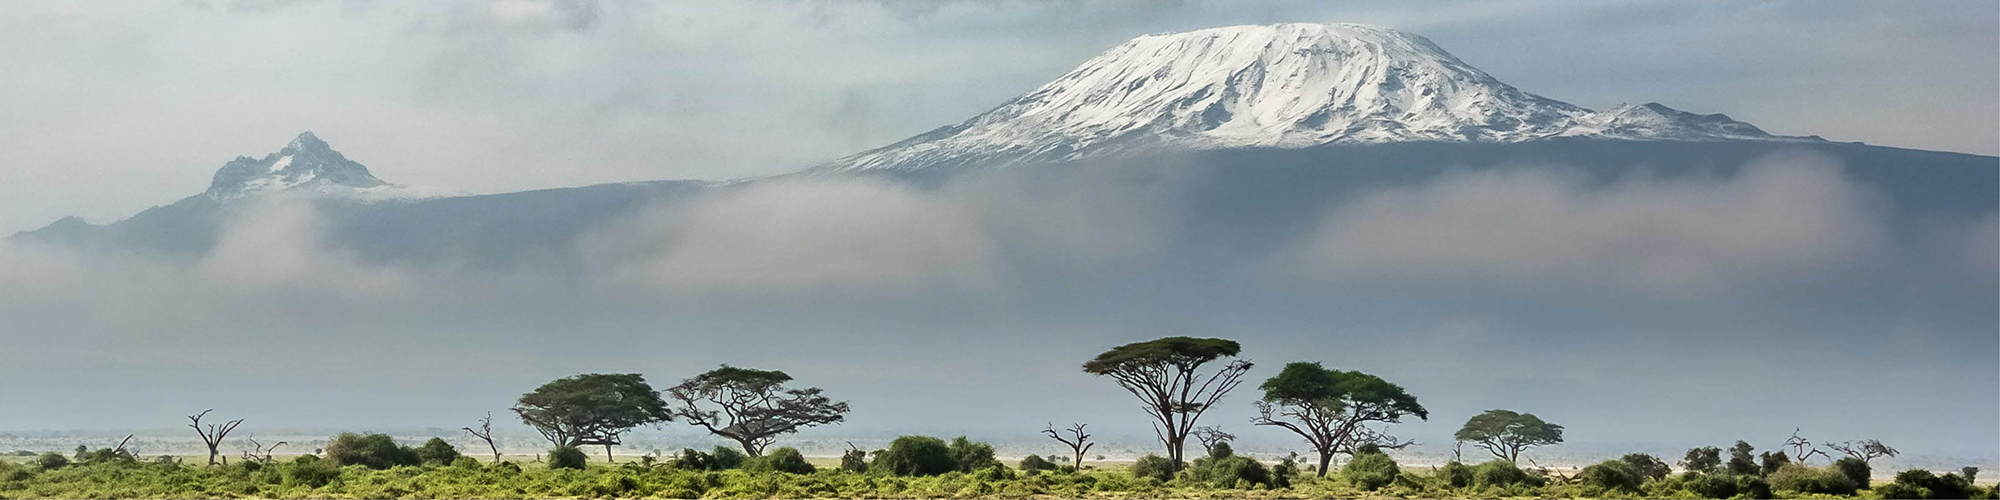 Mt. Kilimanjaro Trek - Lemosho Route 8T7N